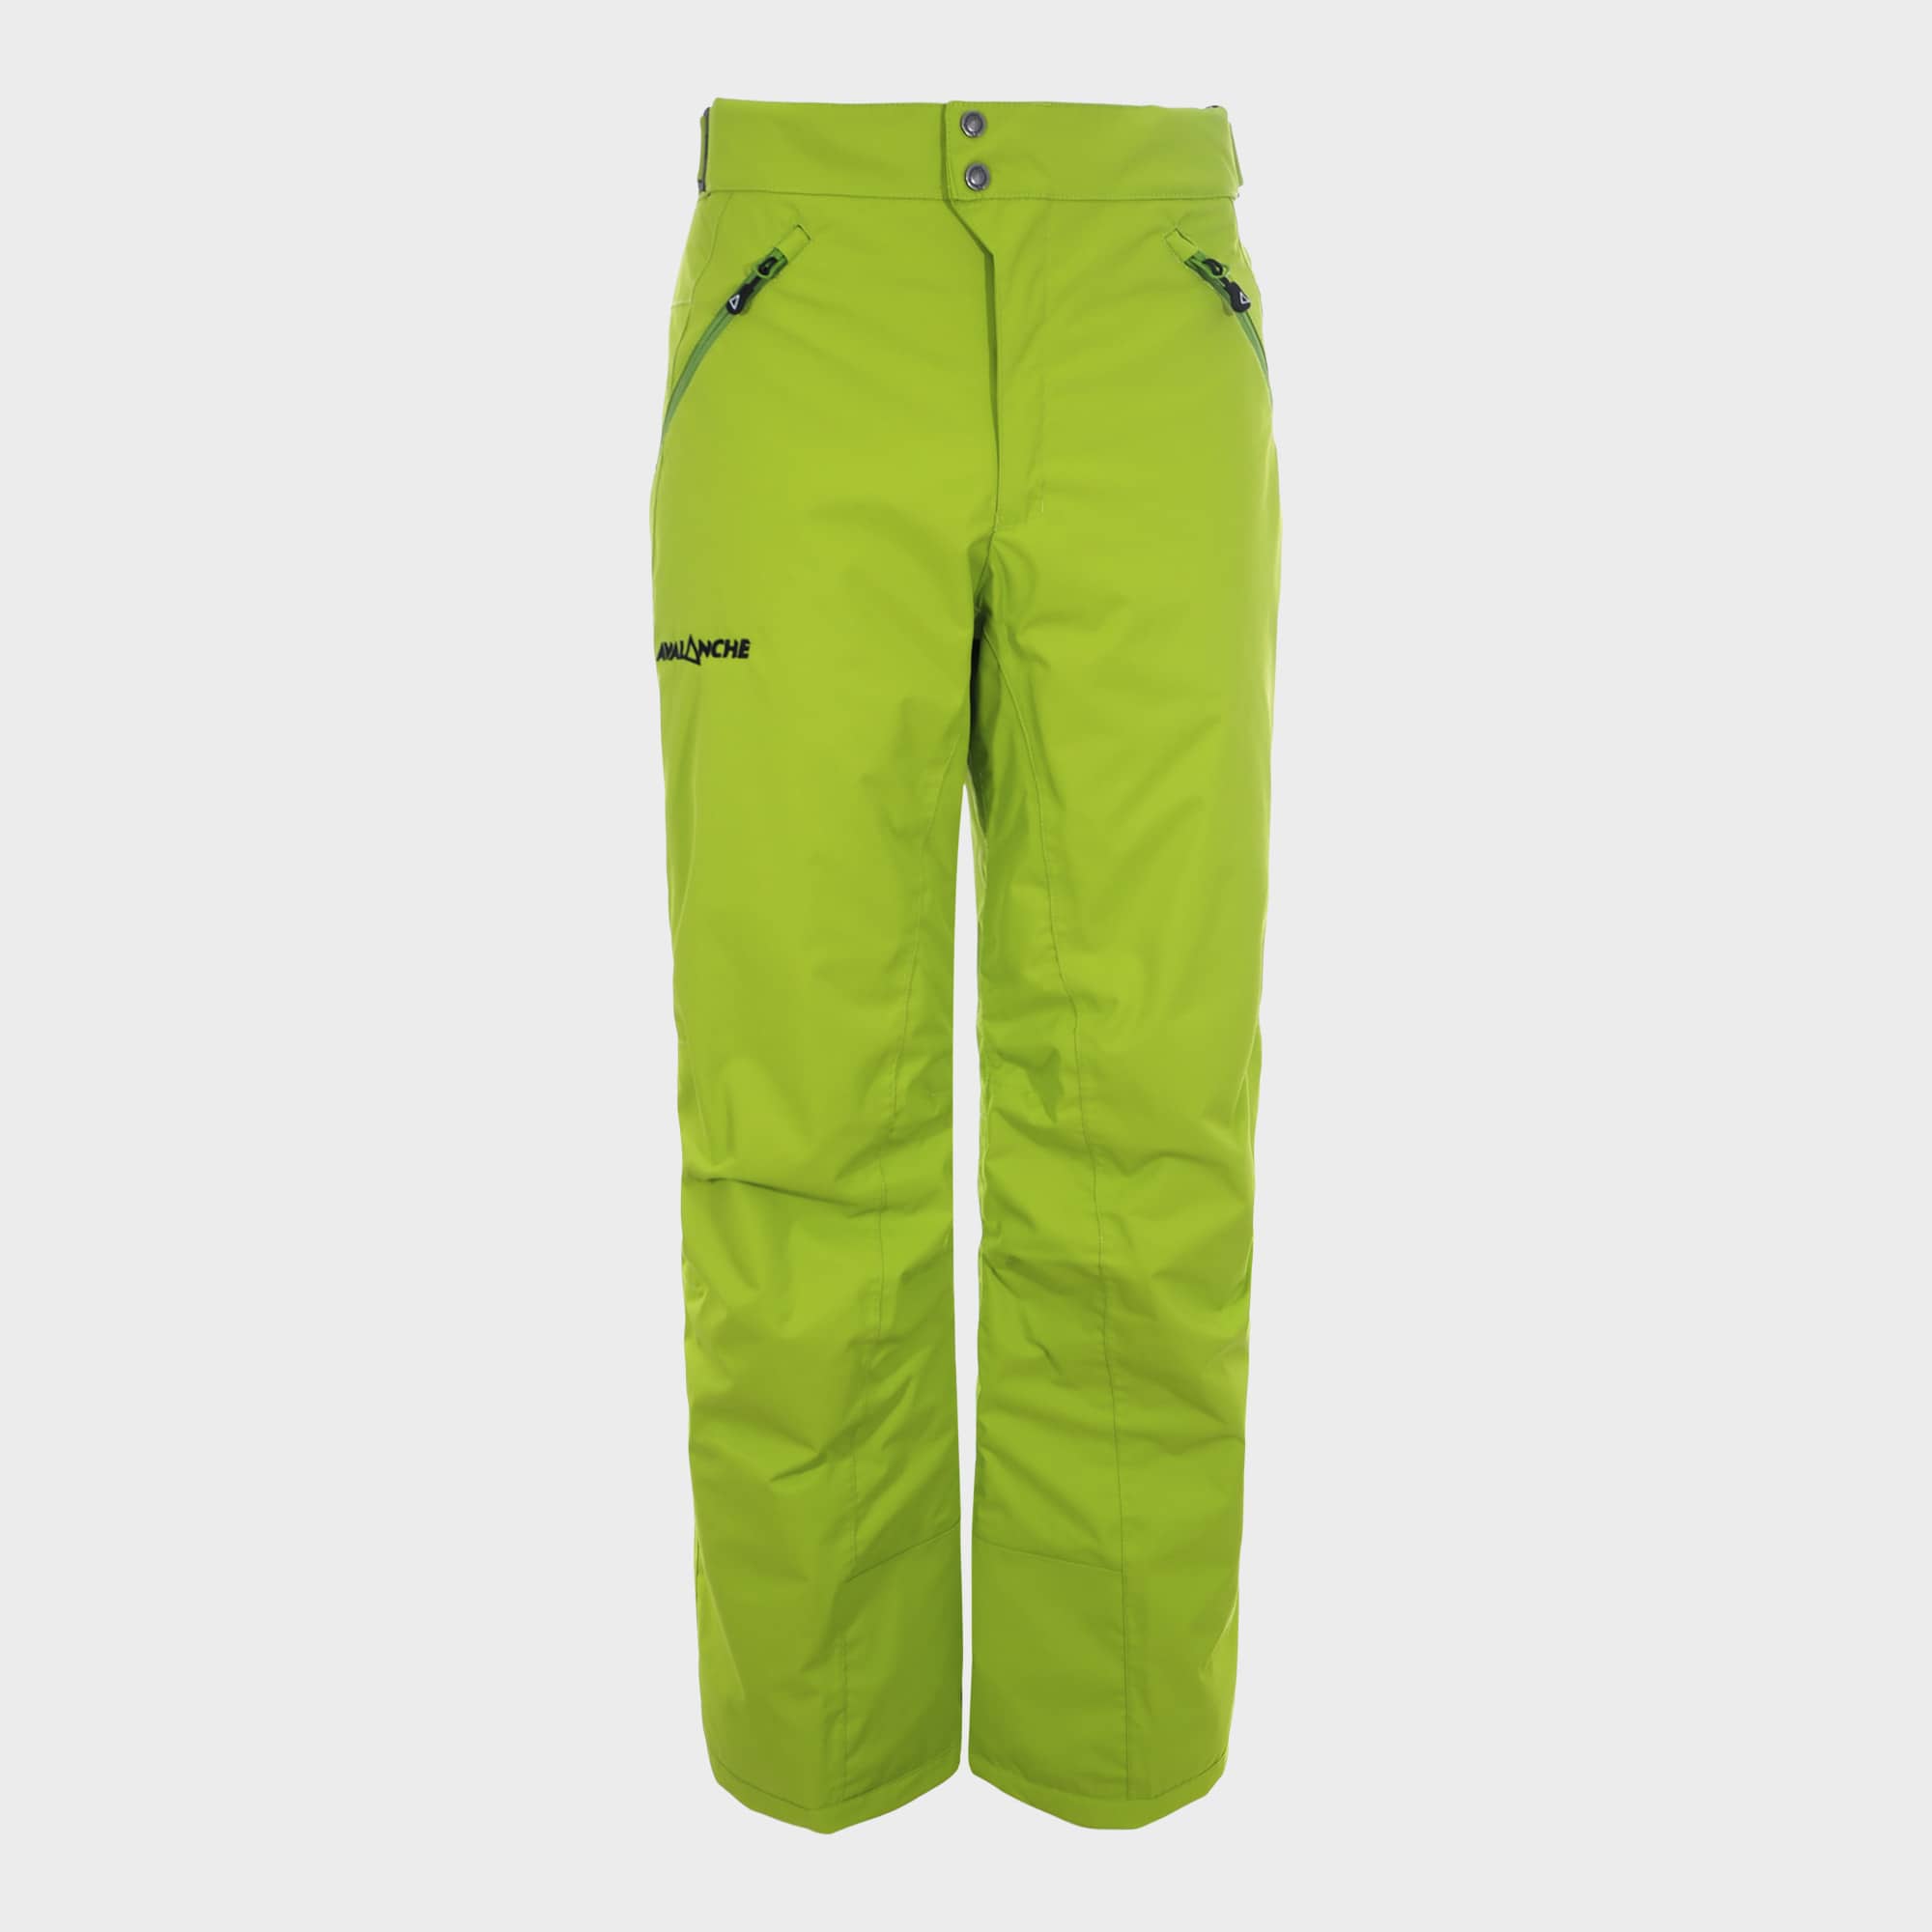 https://www.avalancheskiwear.com/wp-content/uploads/2021/09/JORDAN-FTW-KIWI-1.jpg